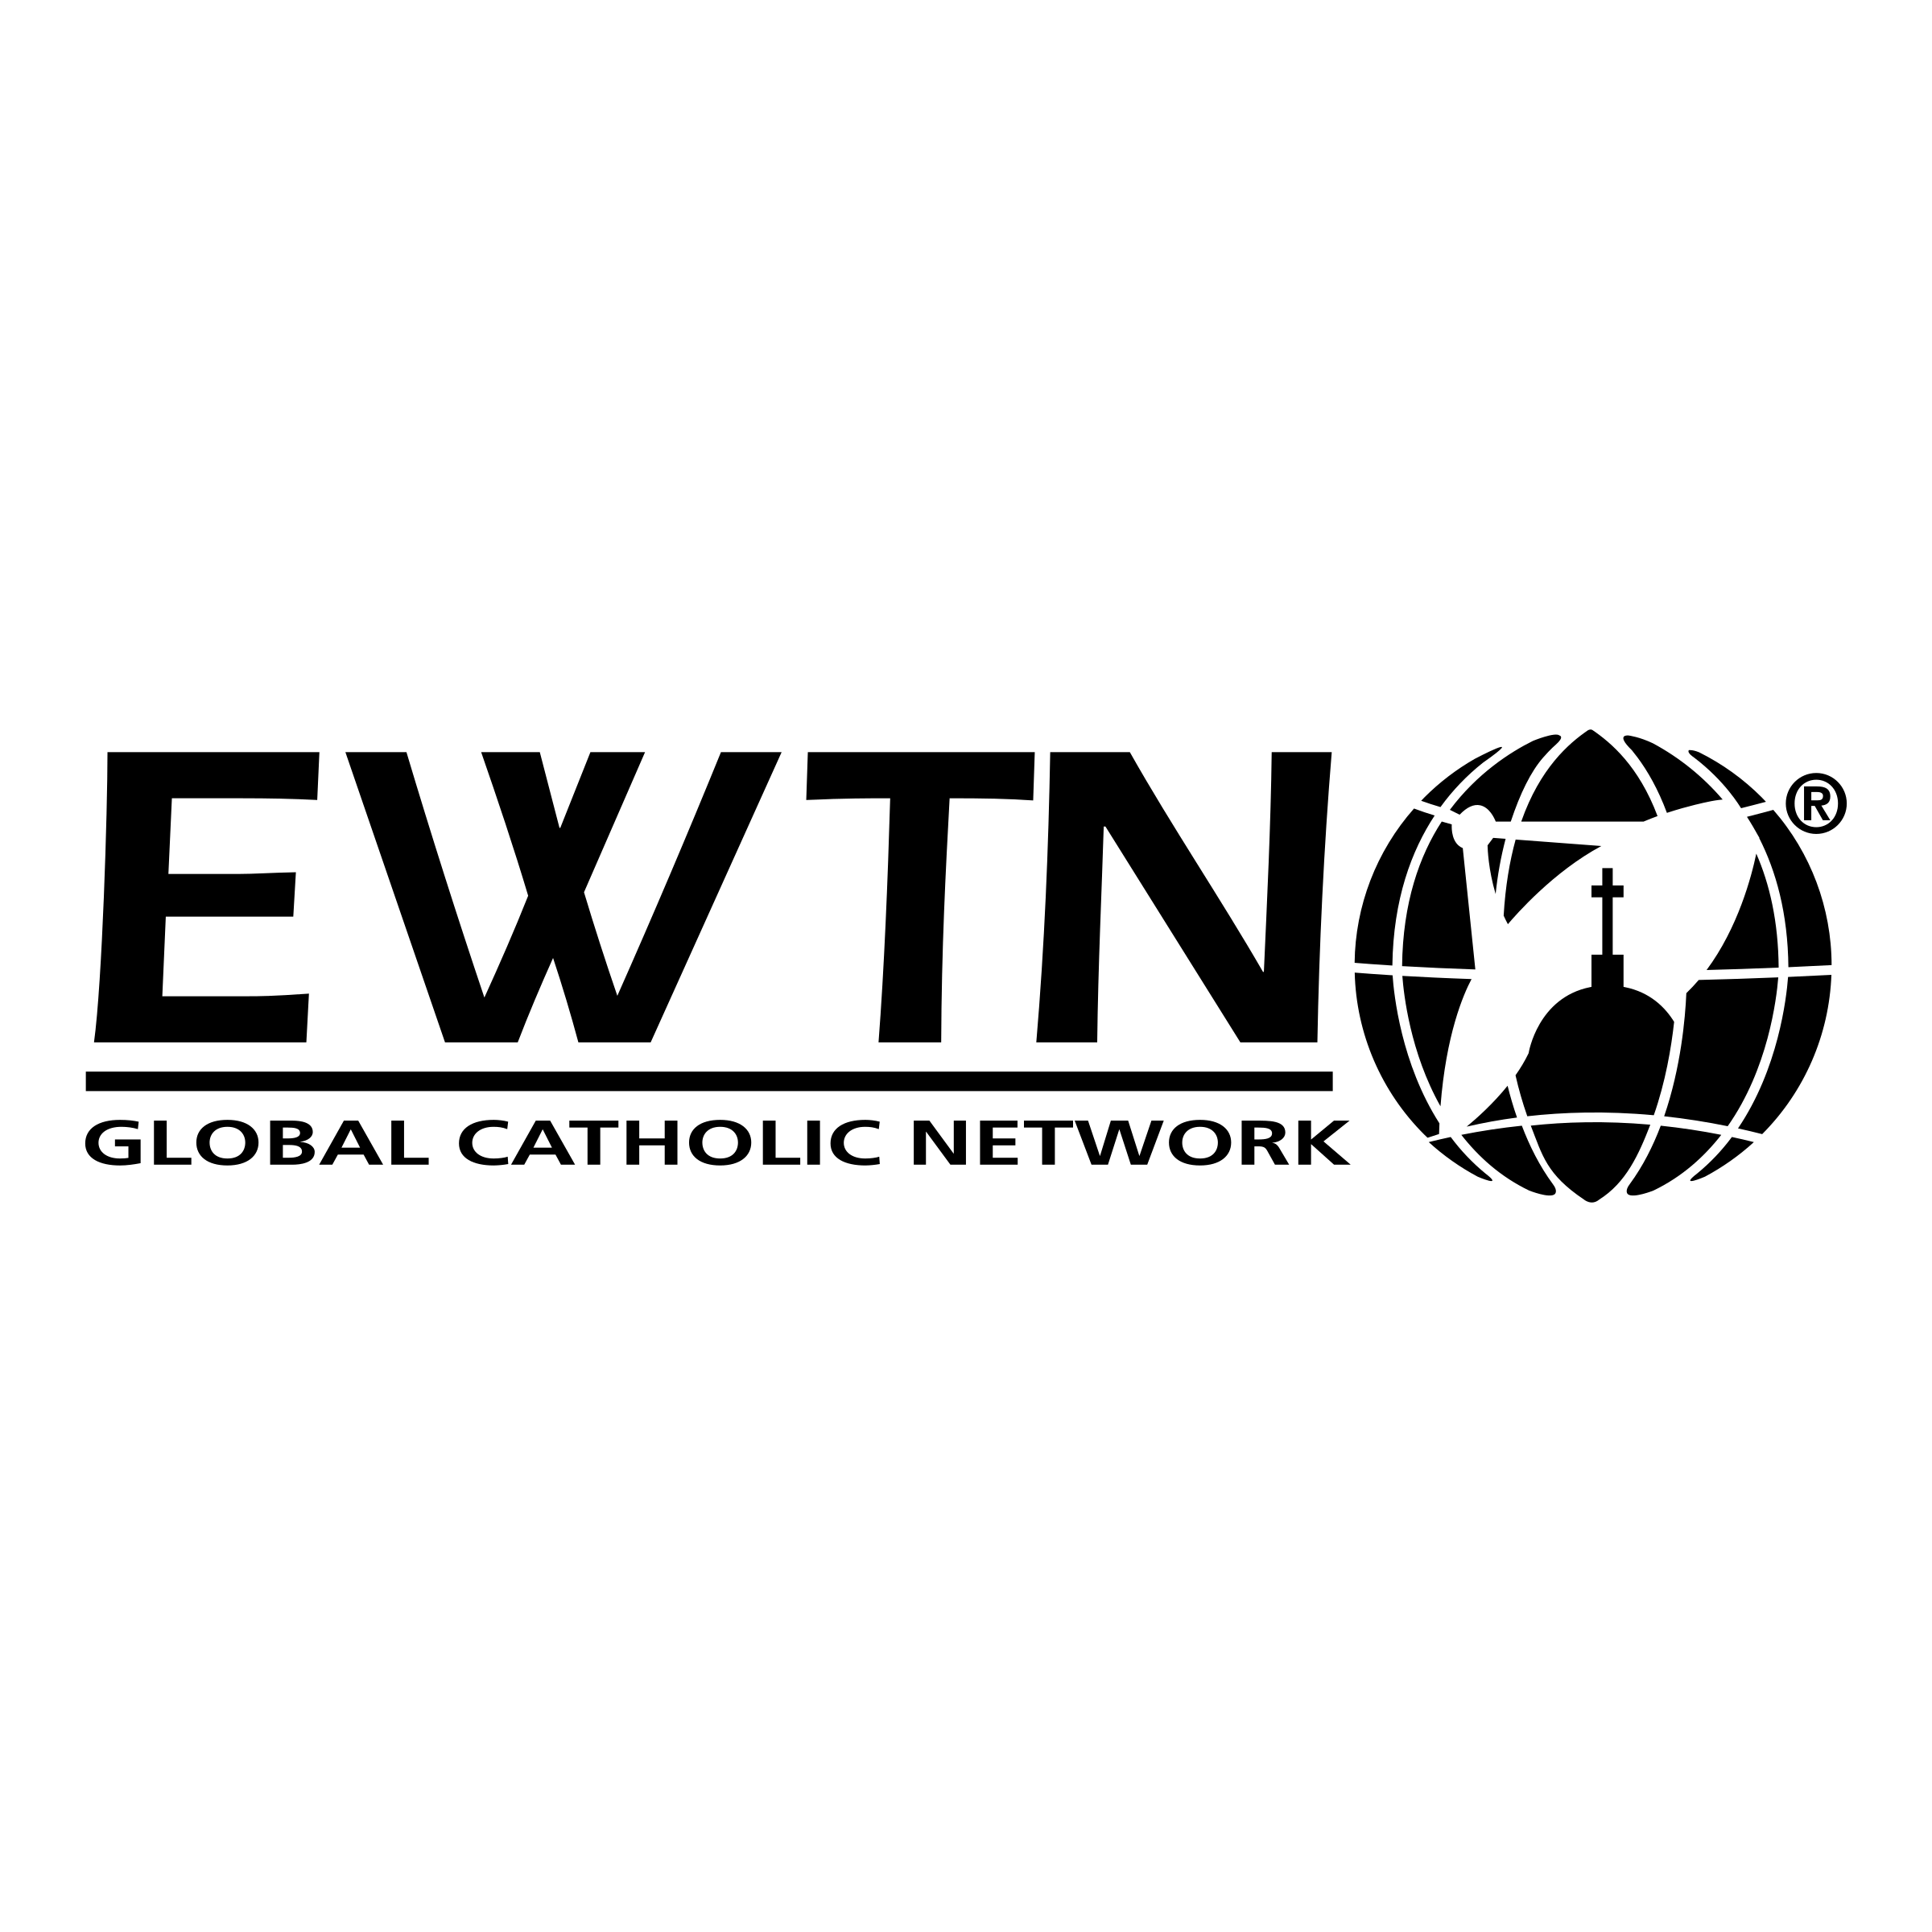 EWTN Logo - EWTN Logo PNG Transparent & SVG Vector